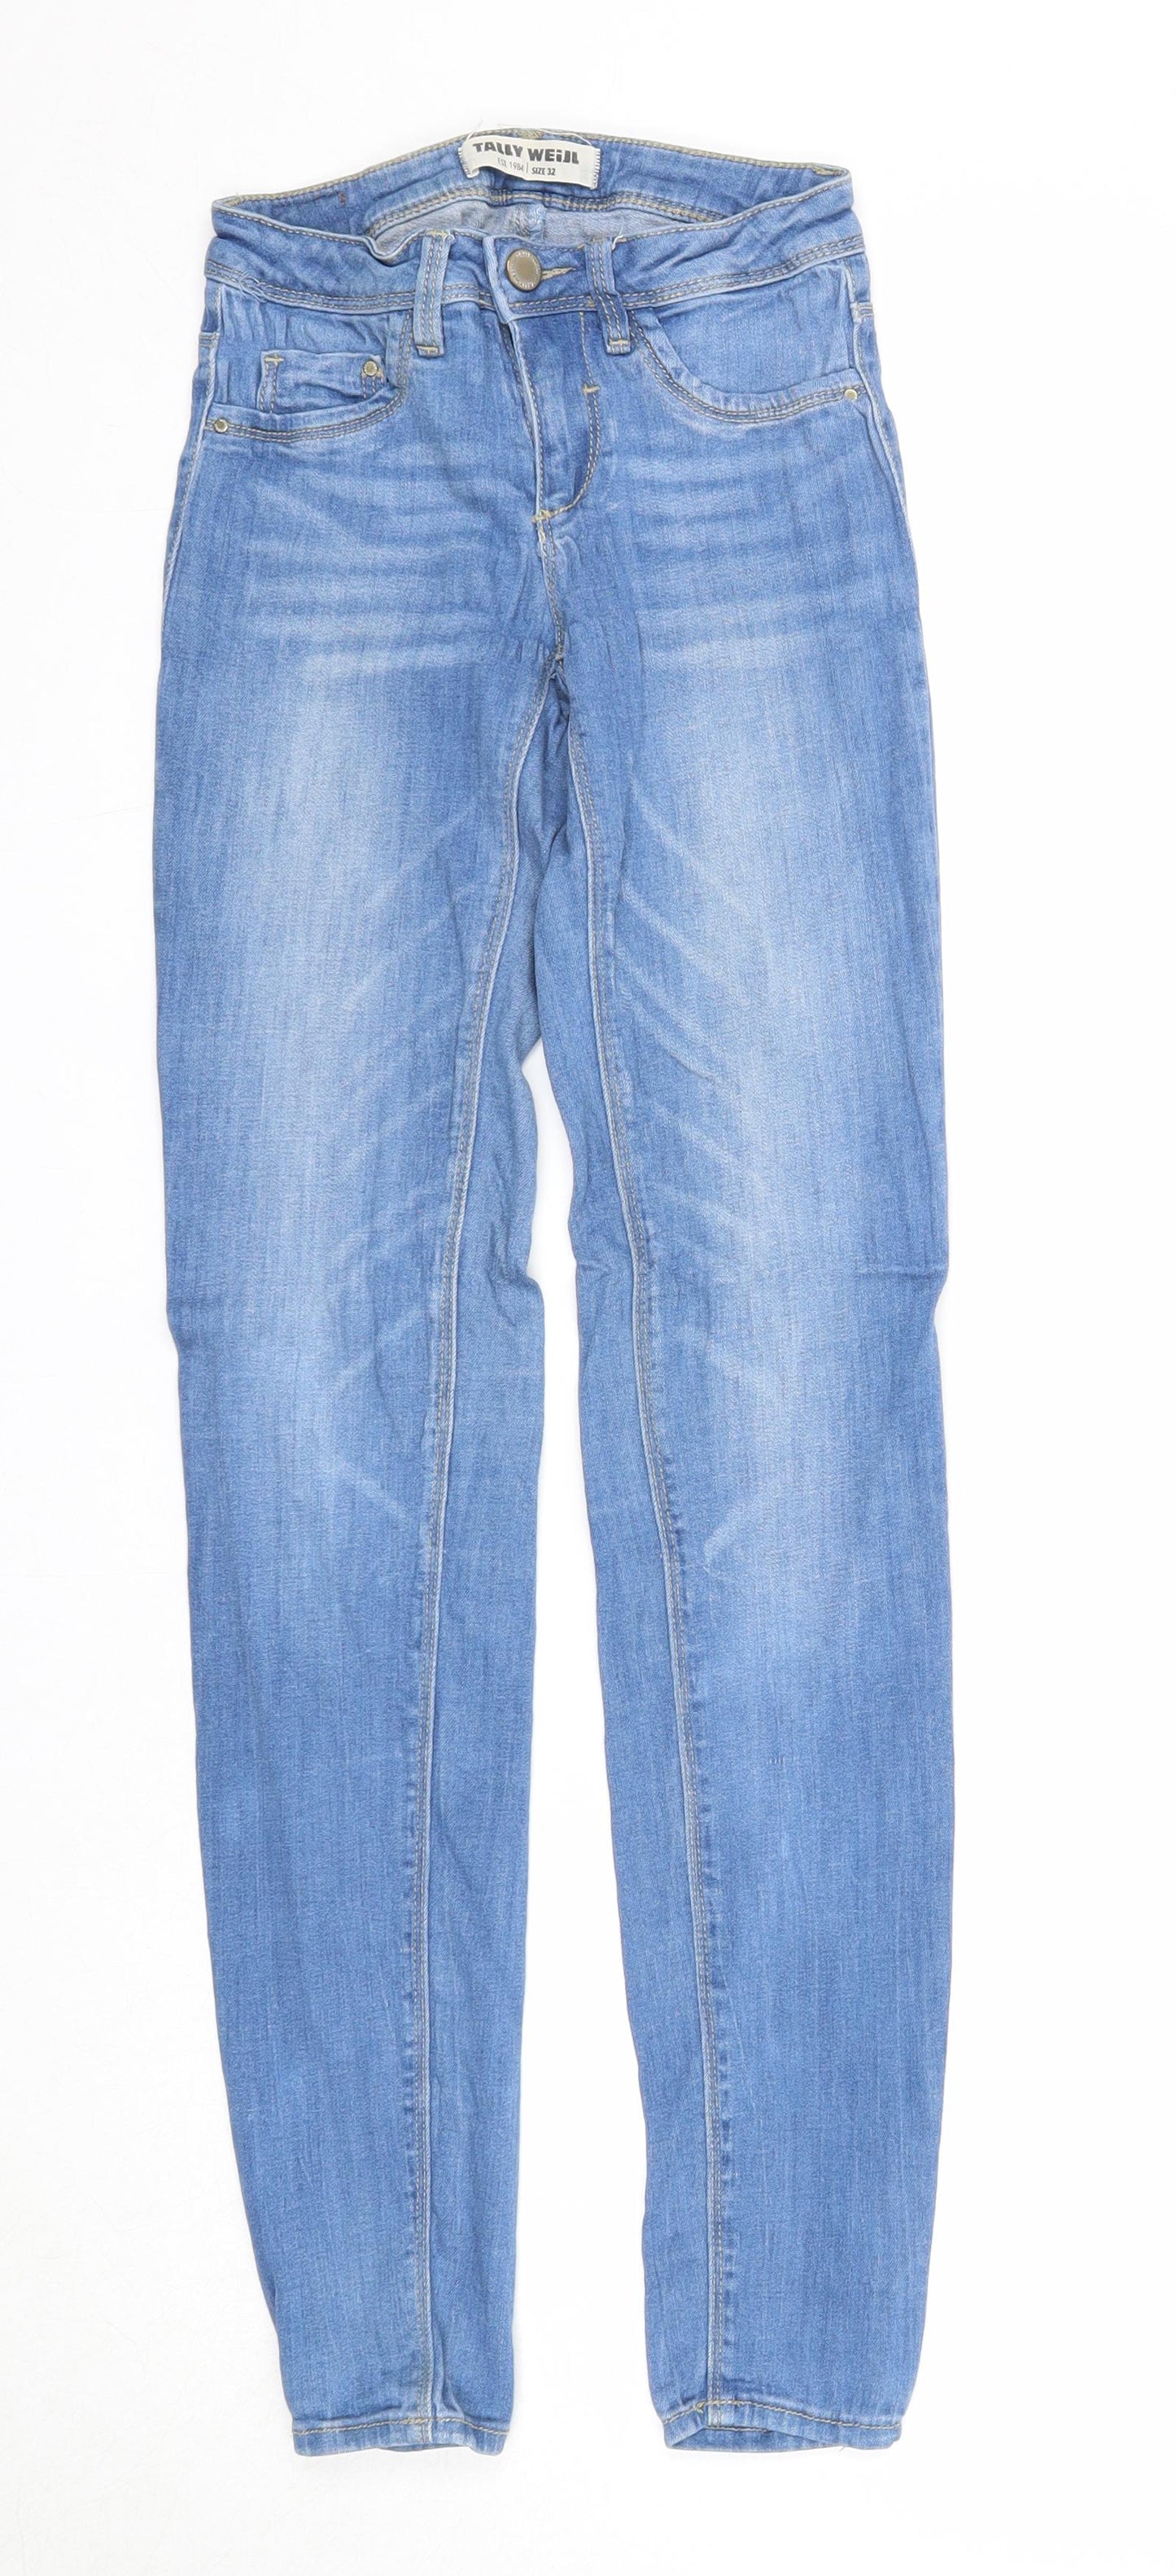 TALLY WEiJL Womens Blue Cotton Skinny Jeans Size 4 Regular Zip - Waist 20 inches